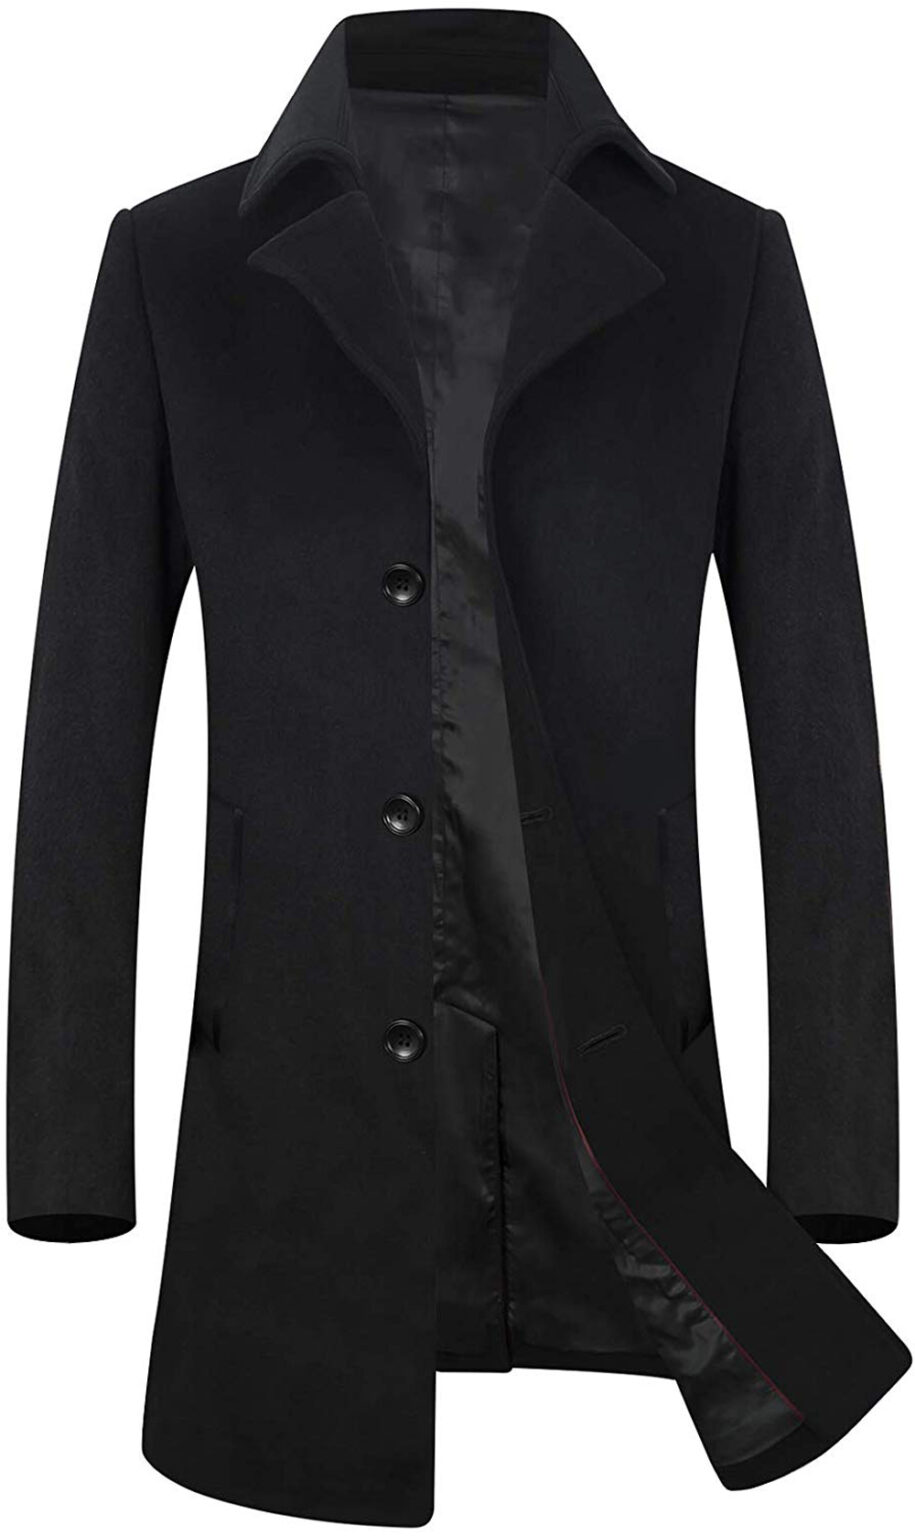 Men's Double Breast Black Trench Wool Coat, Gentle Style | VearFit